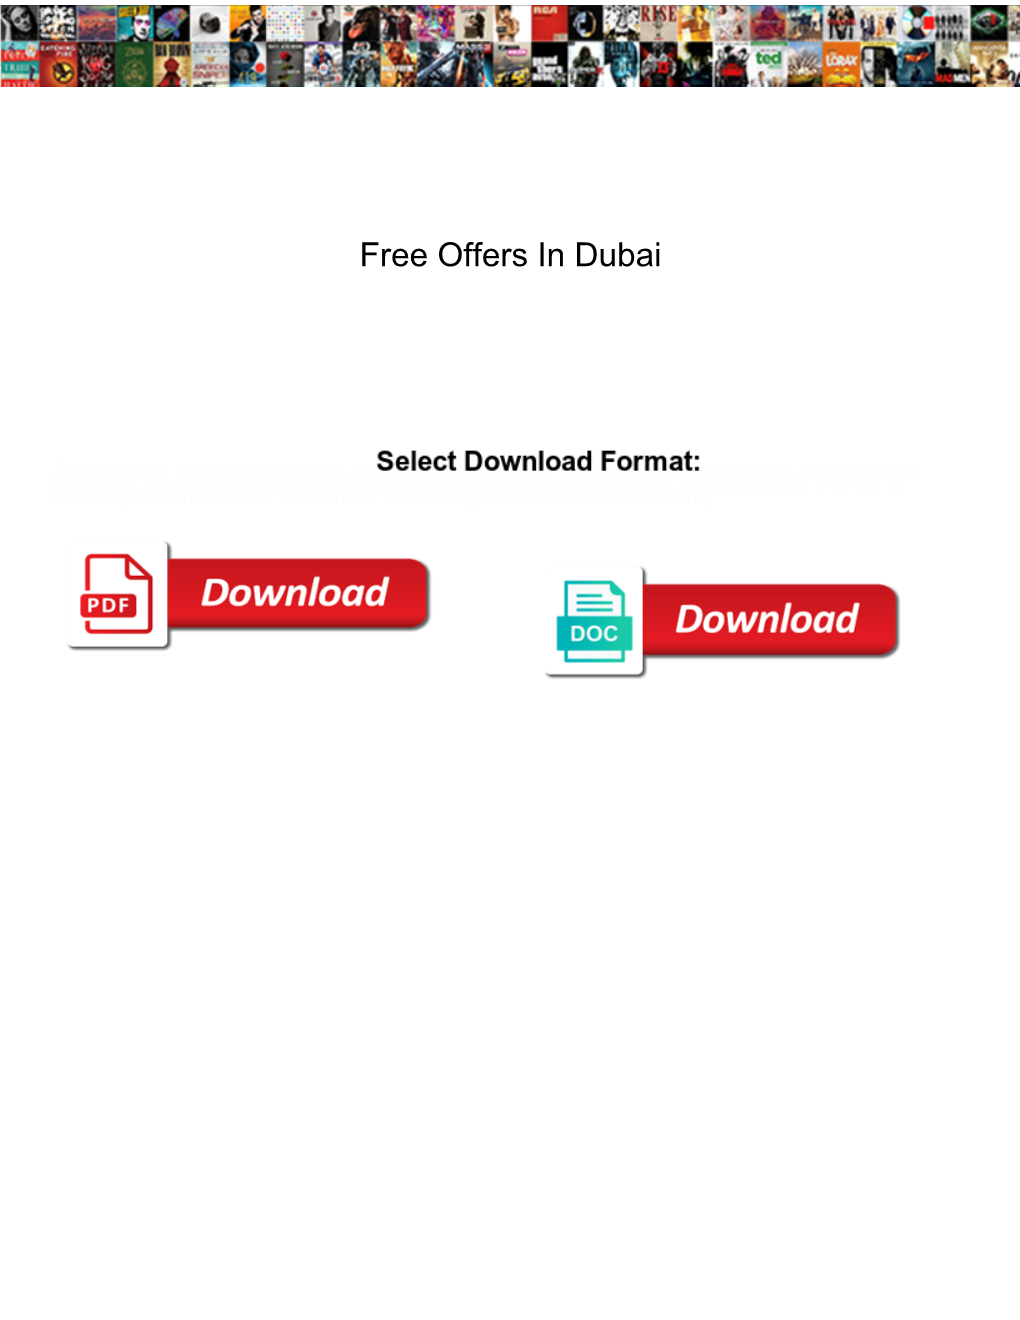 Free Offers in Dubai